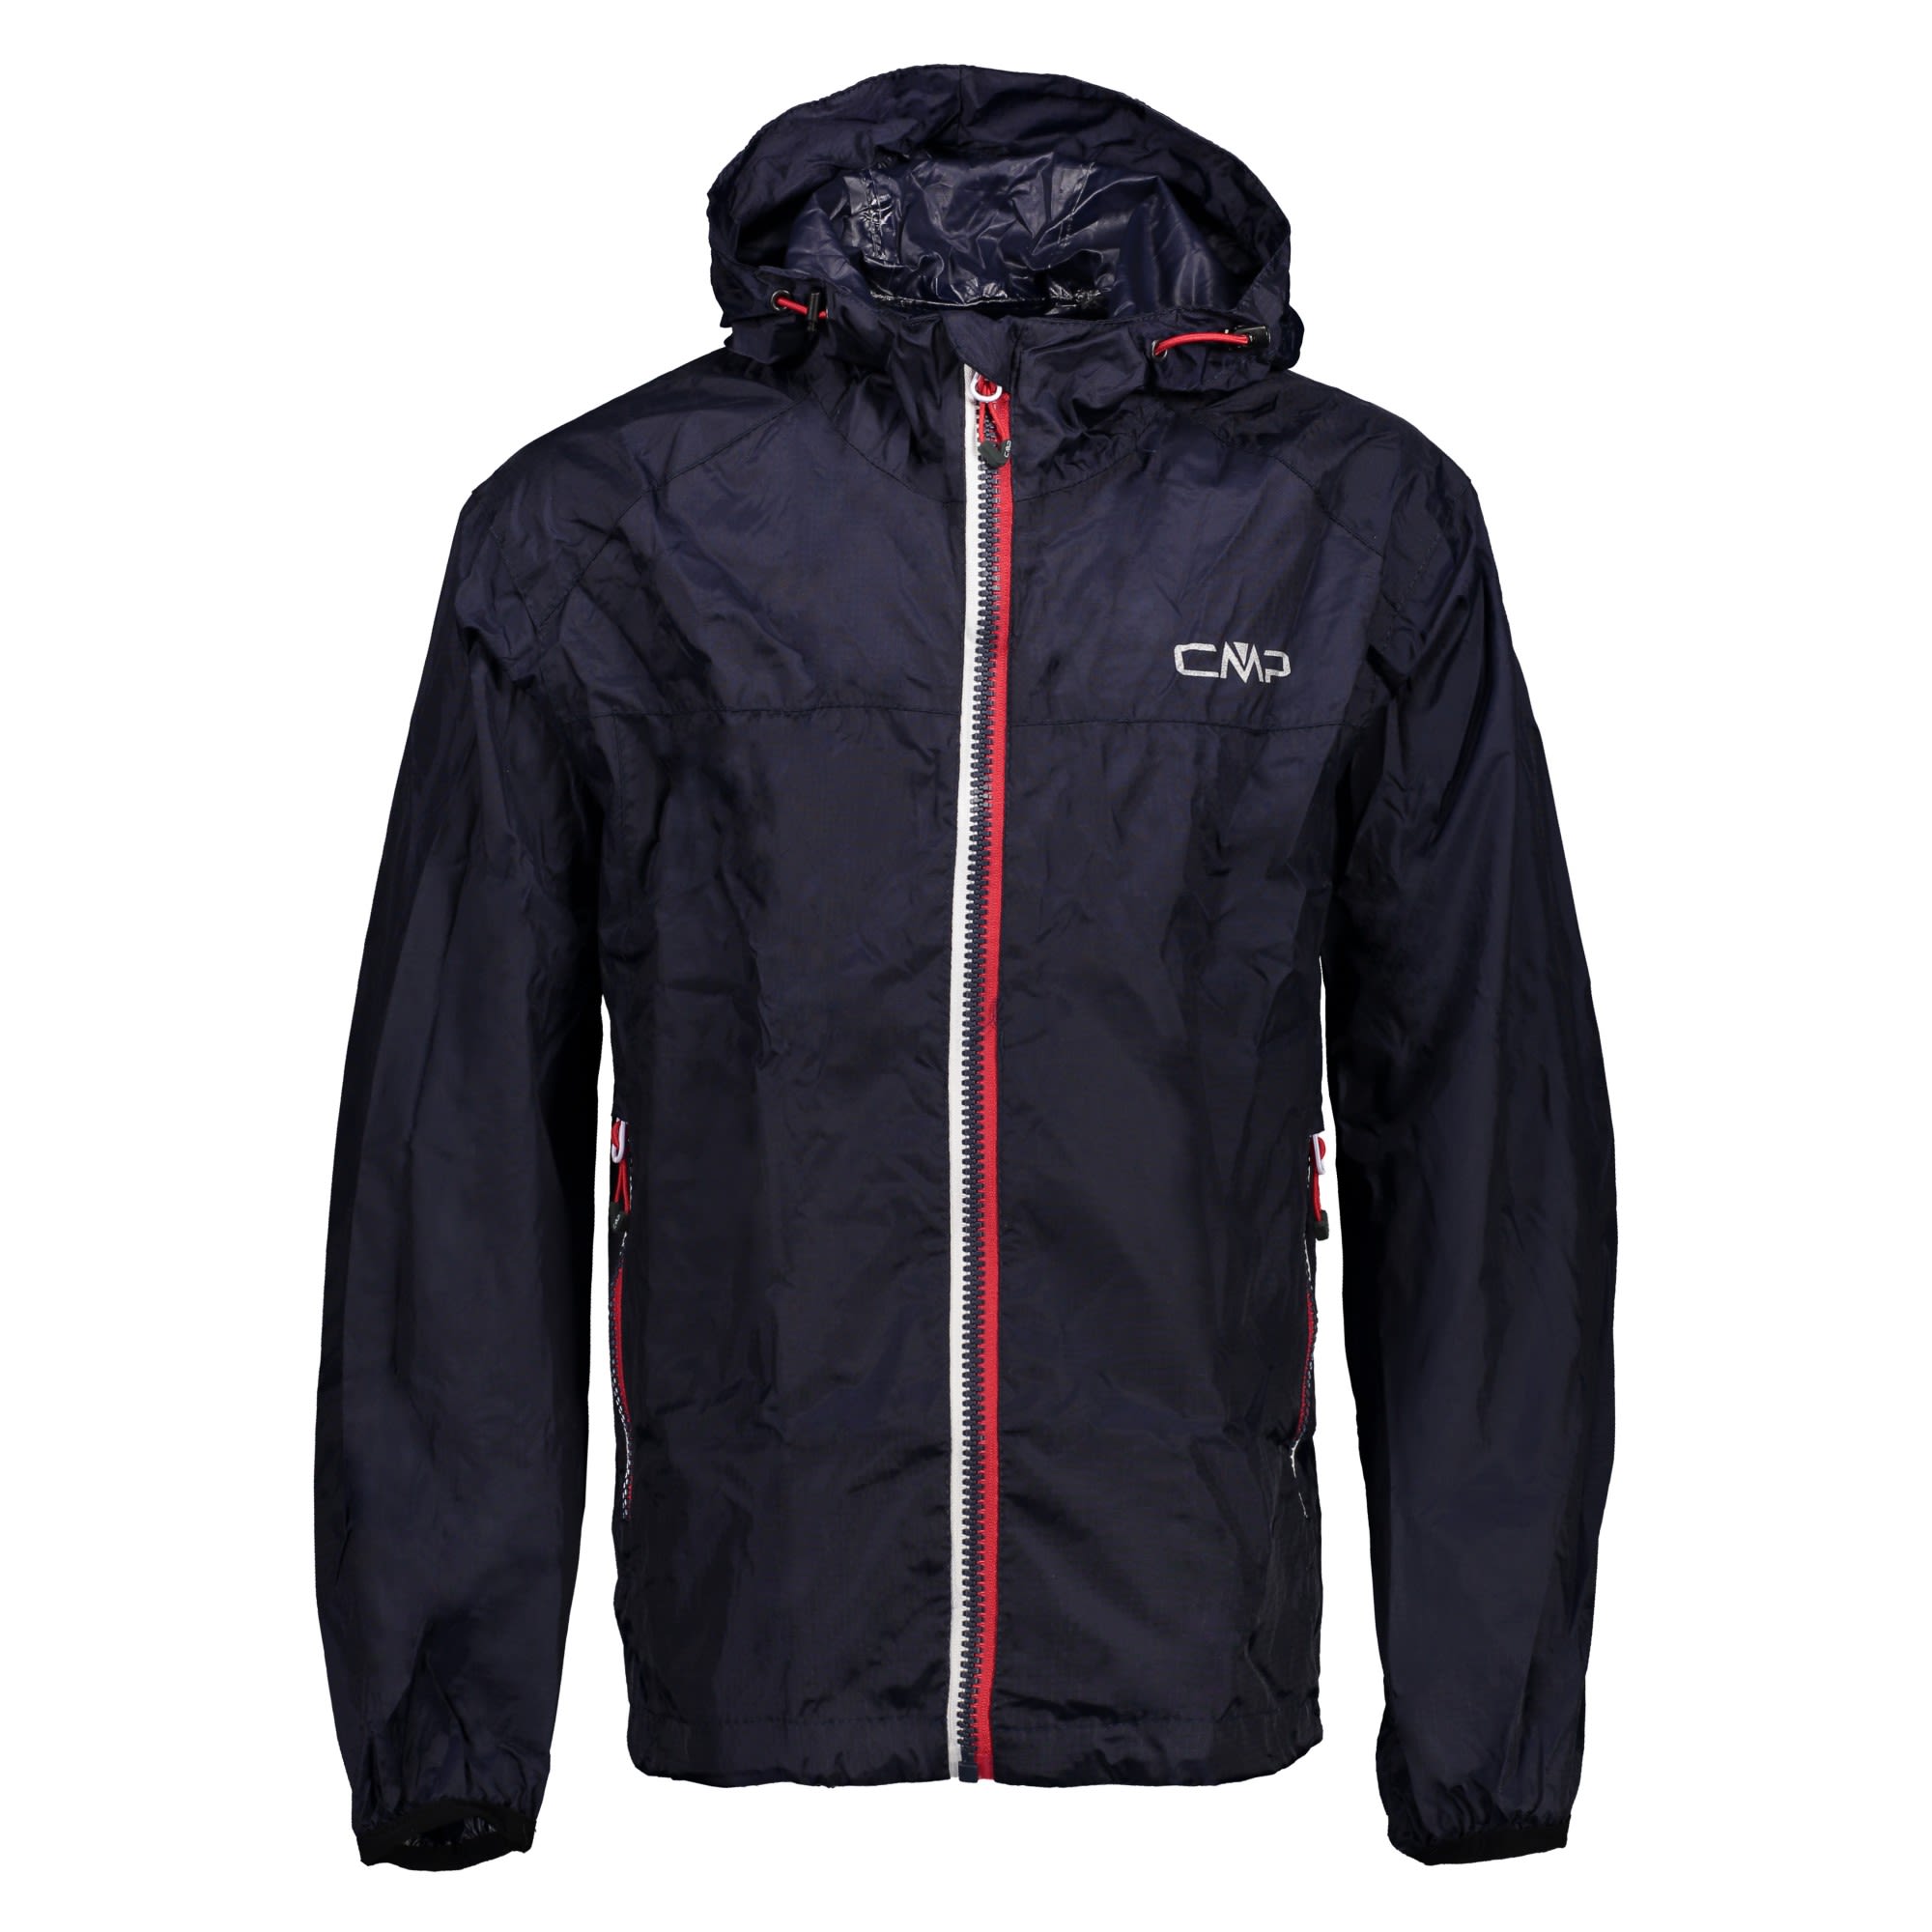 CMP BOY FIX Hood Jacket Ripstop Blau- Male Regenjacken und Hardshells- Grsse 104 - Farbe Navy unter CMP